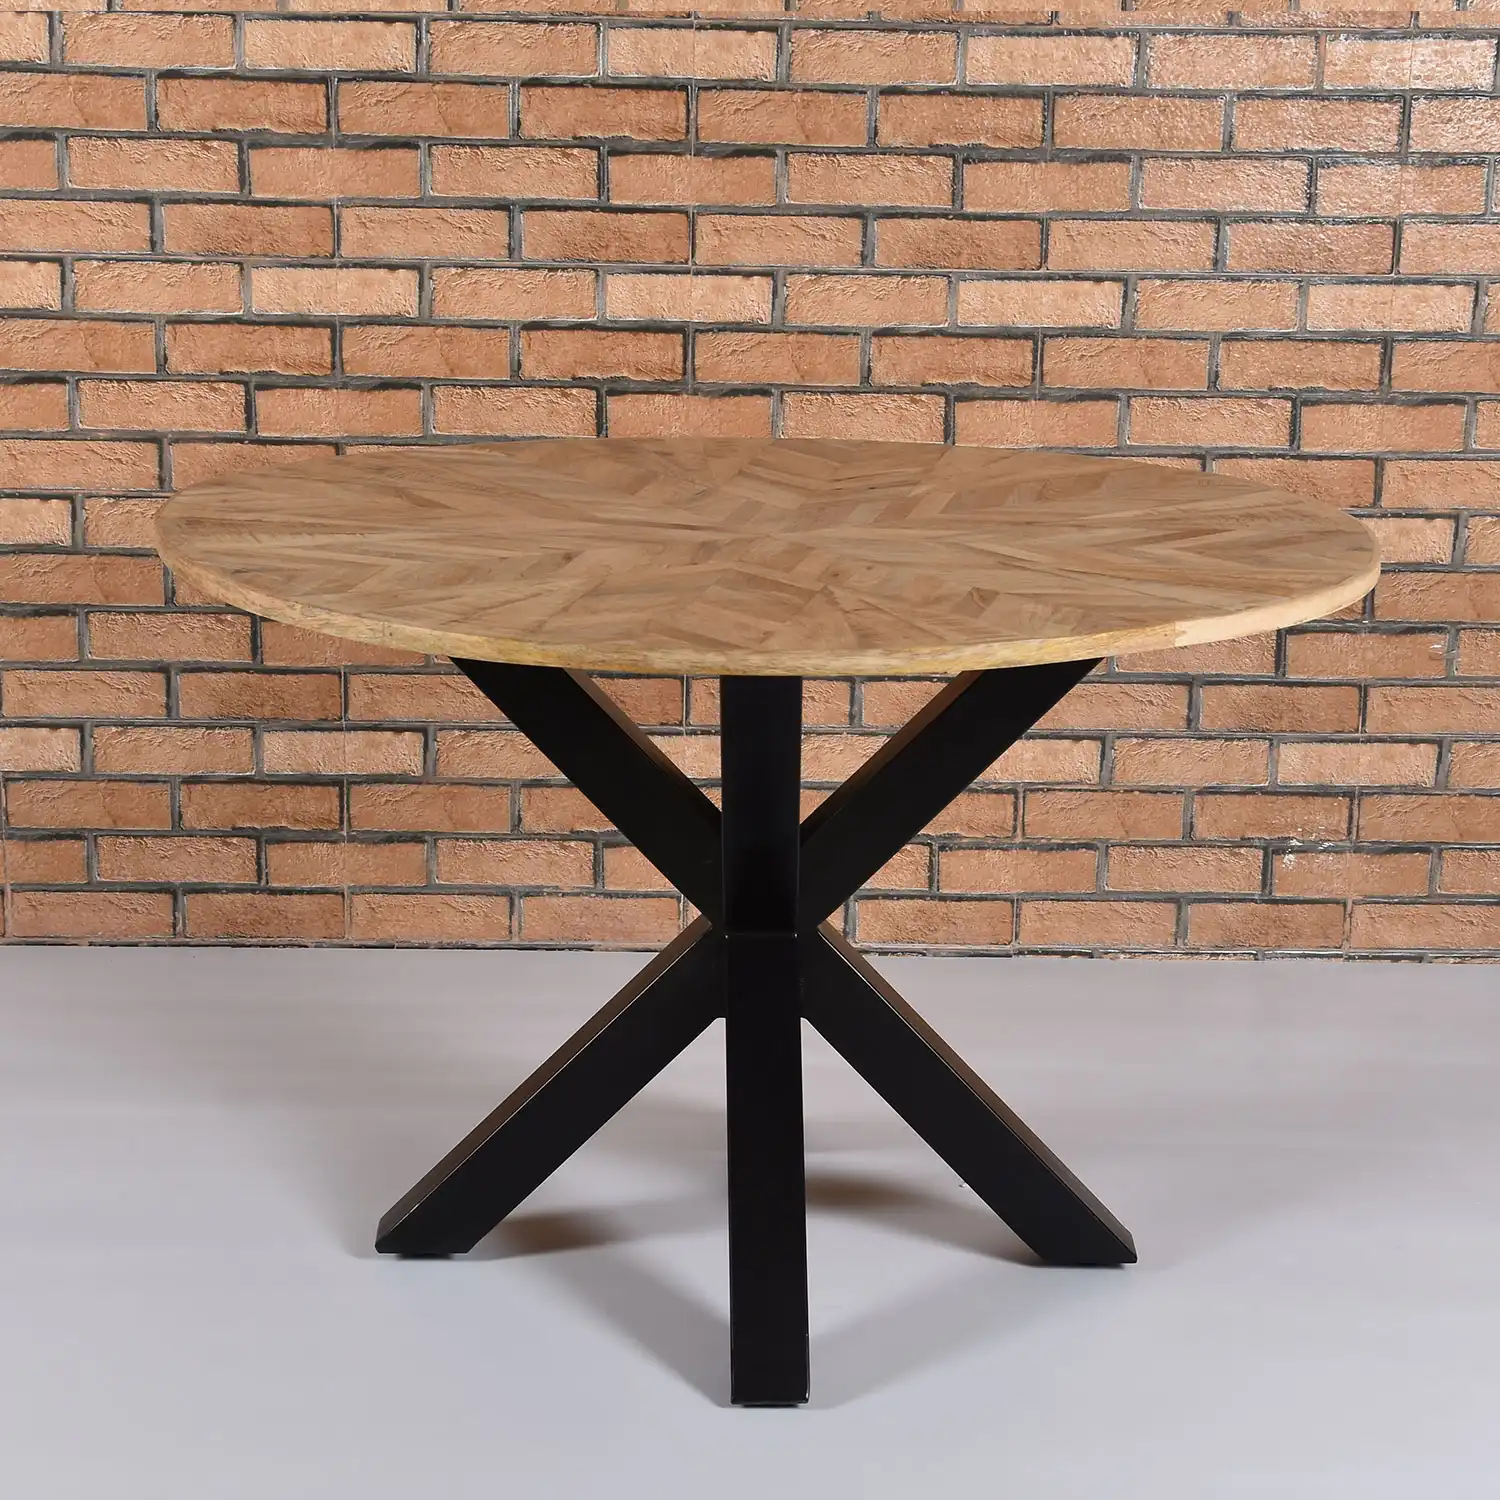 Mango Wood & Iron Round Table
(Top Thickness : 50 MM) - popular handicrafts